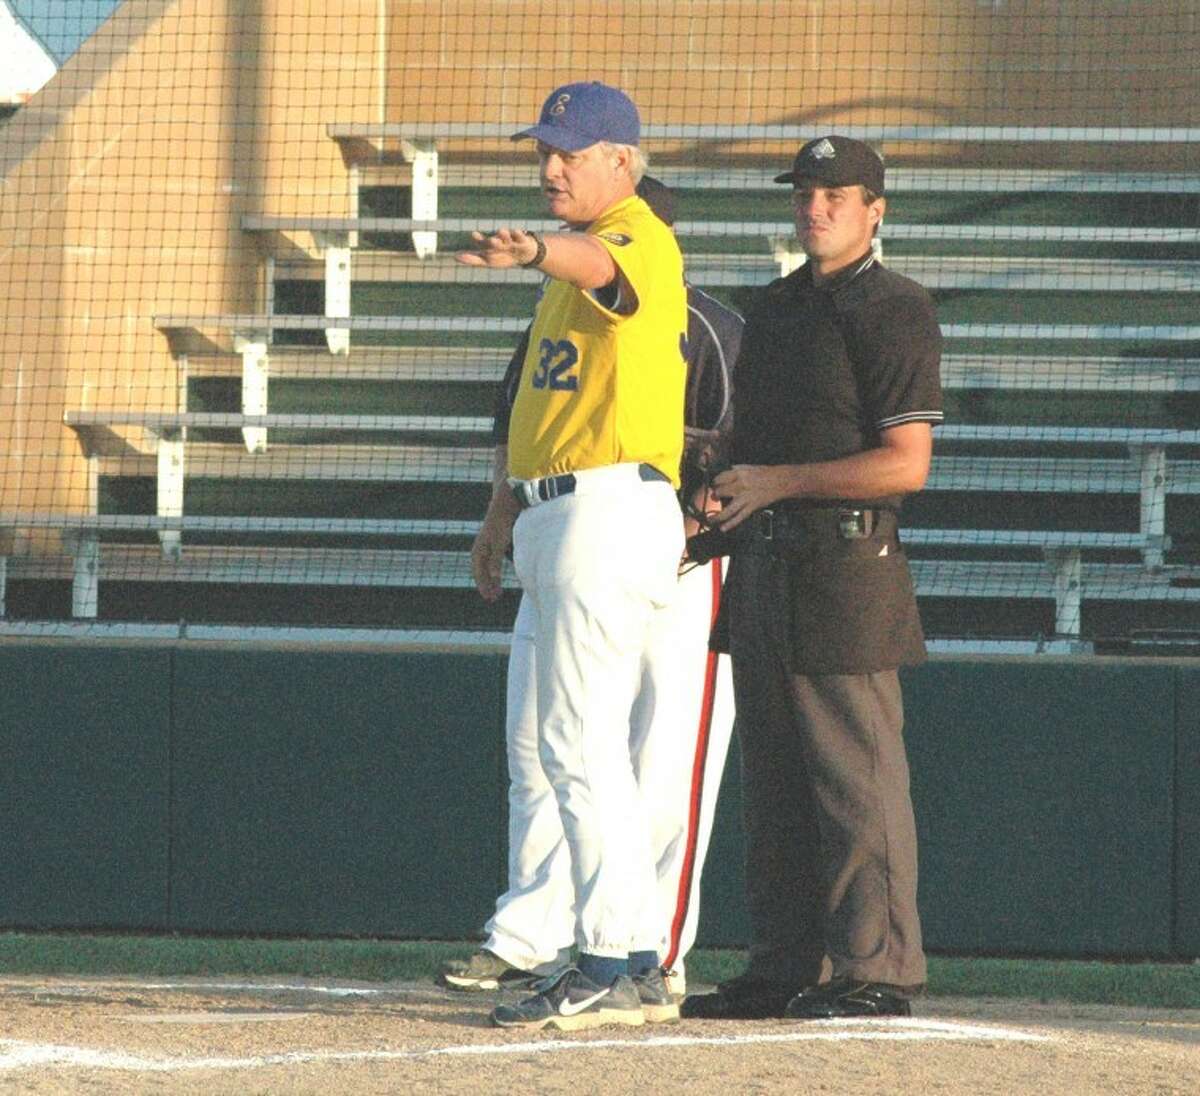 Edwardsville American Legion Post 199 manager Ken Schaake was happy to bring Legion baseball back to Edwardsville in 2011.